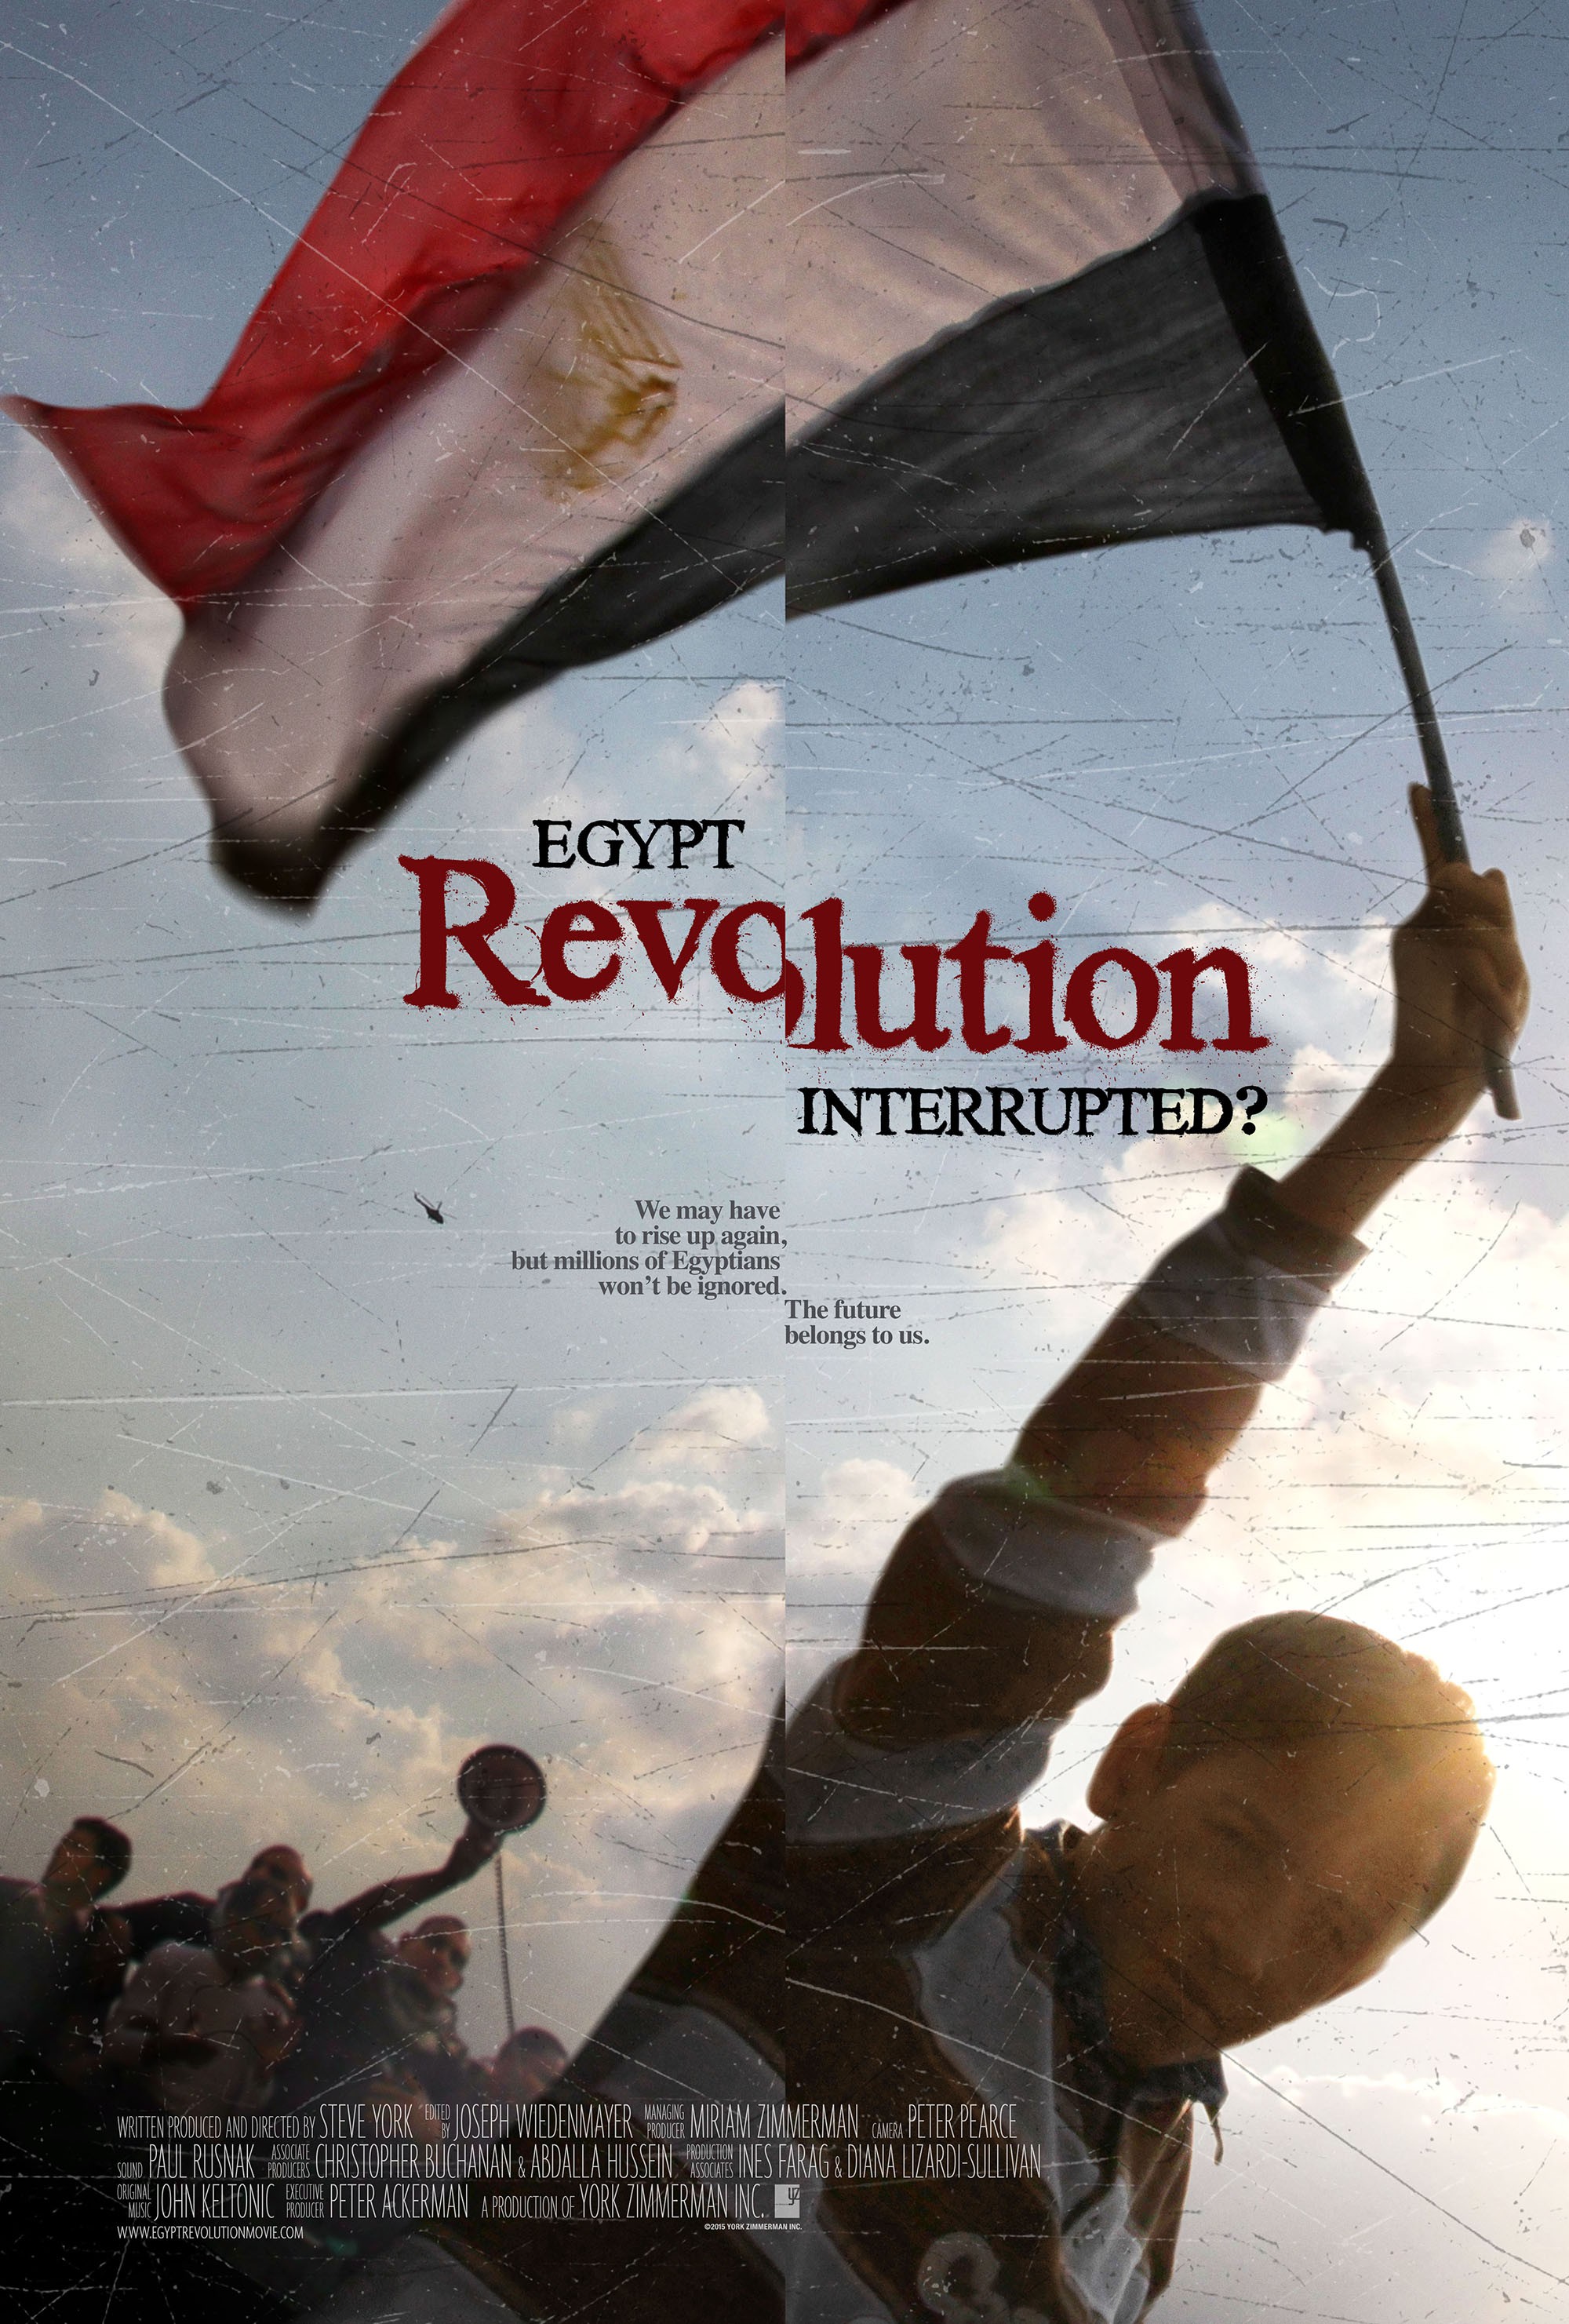 Mega Sized Movie Poster Image for Egypt: Revolution Interrupted? 